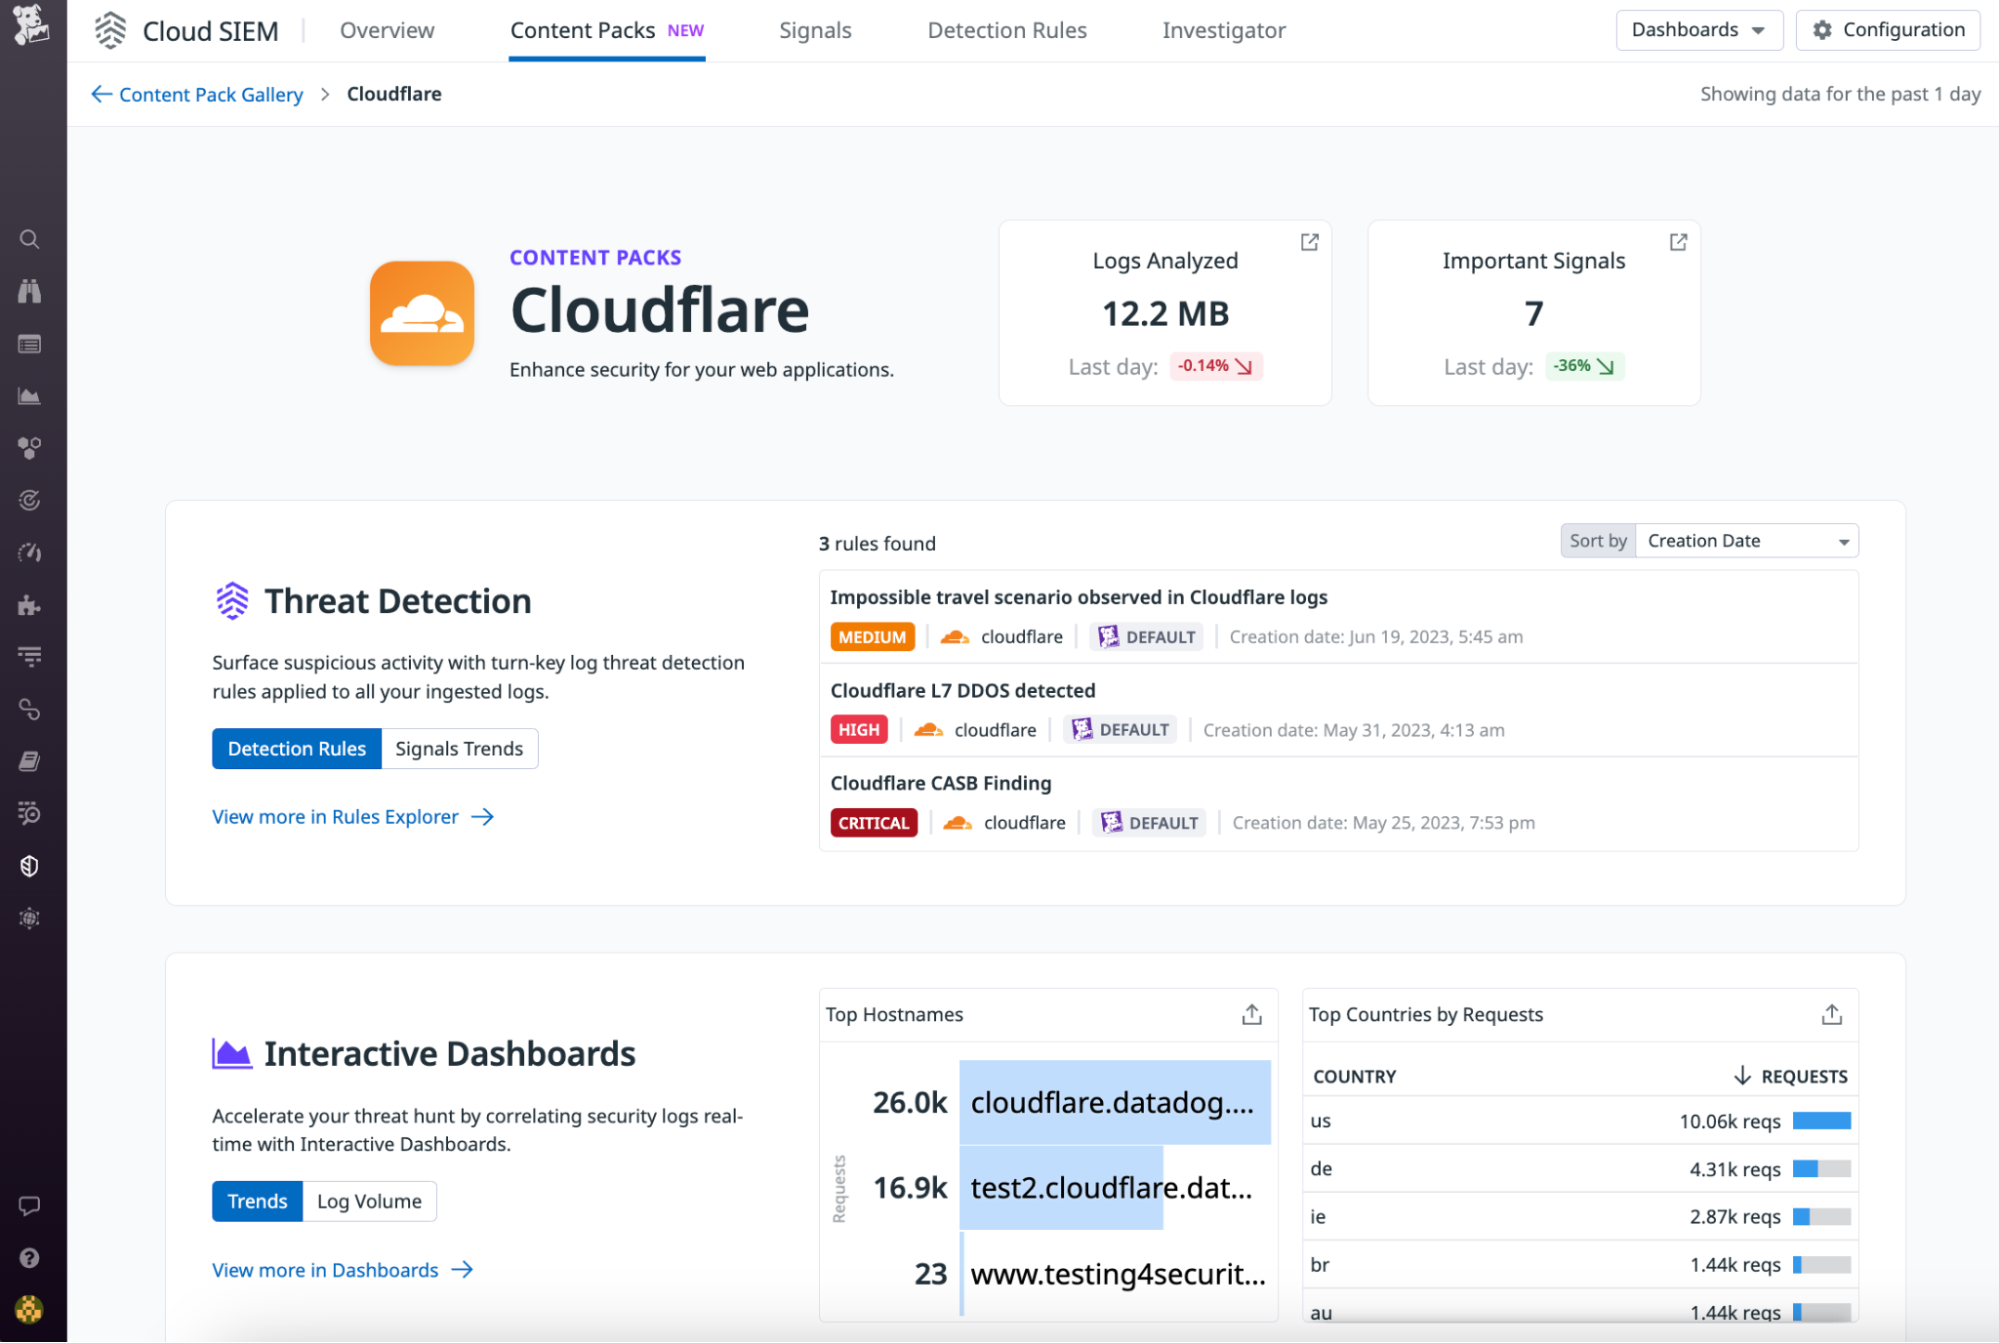 Integrate Cloudflare Zero Trust with Datadog Cloud SIEM